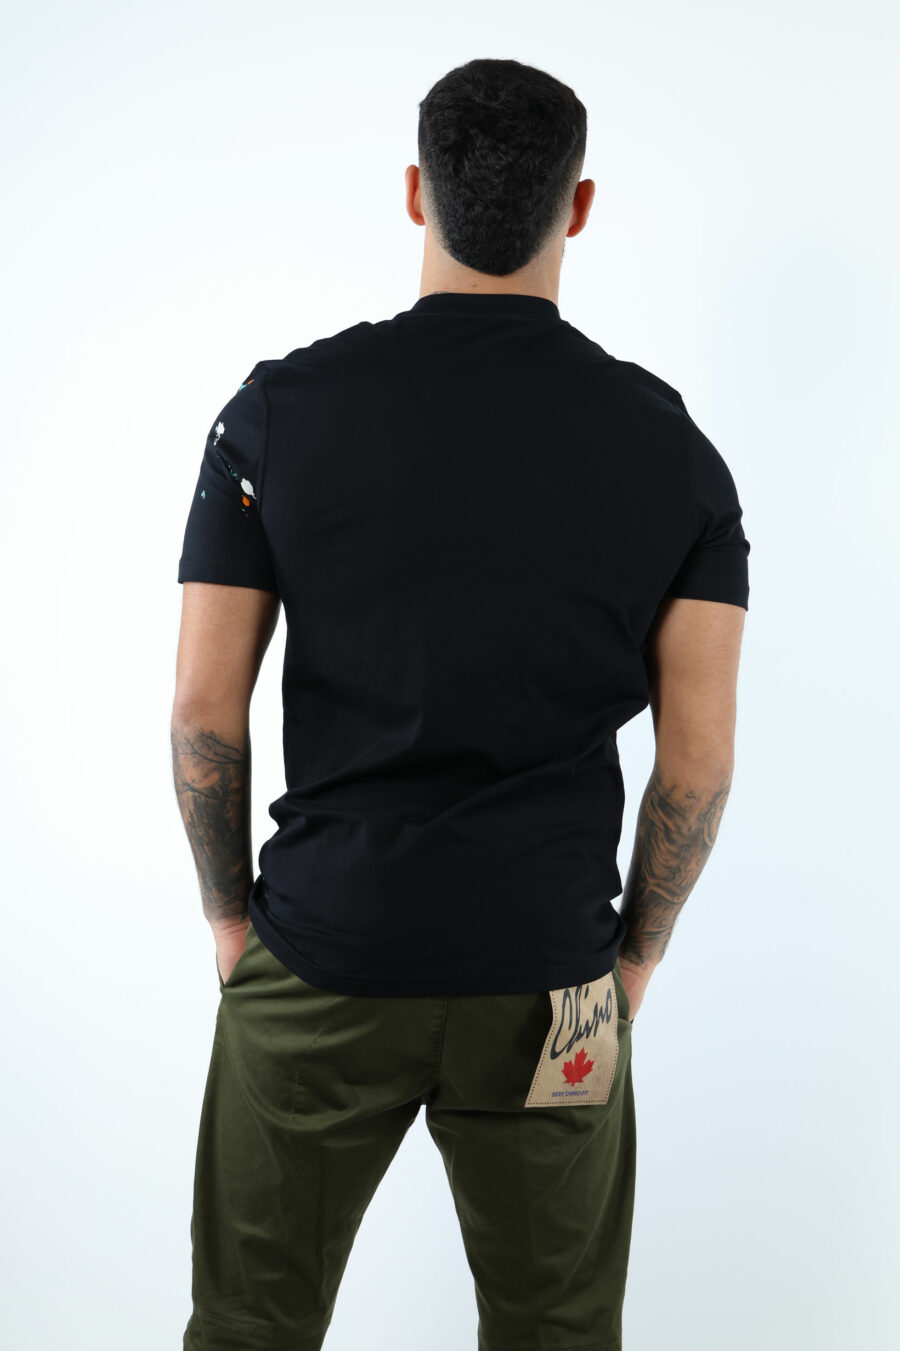 T-shirt preta com maxilogo "couture milano" com "splash" multicolorido - 107054